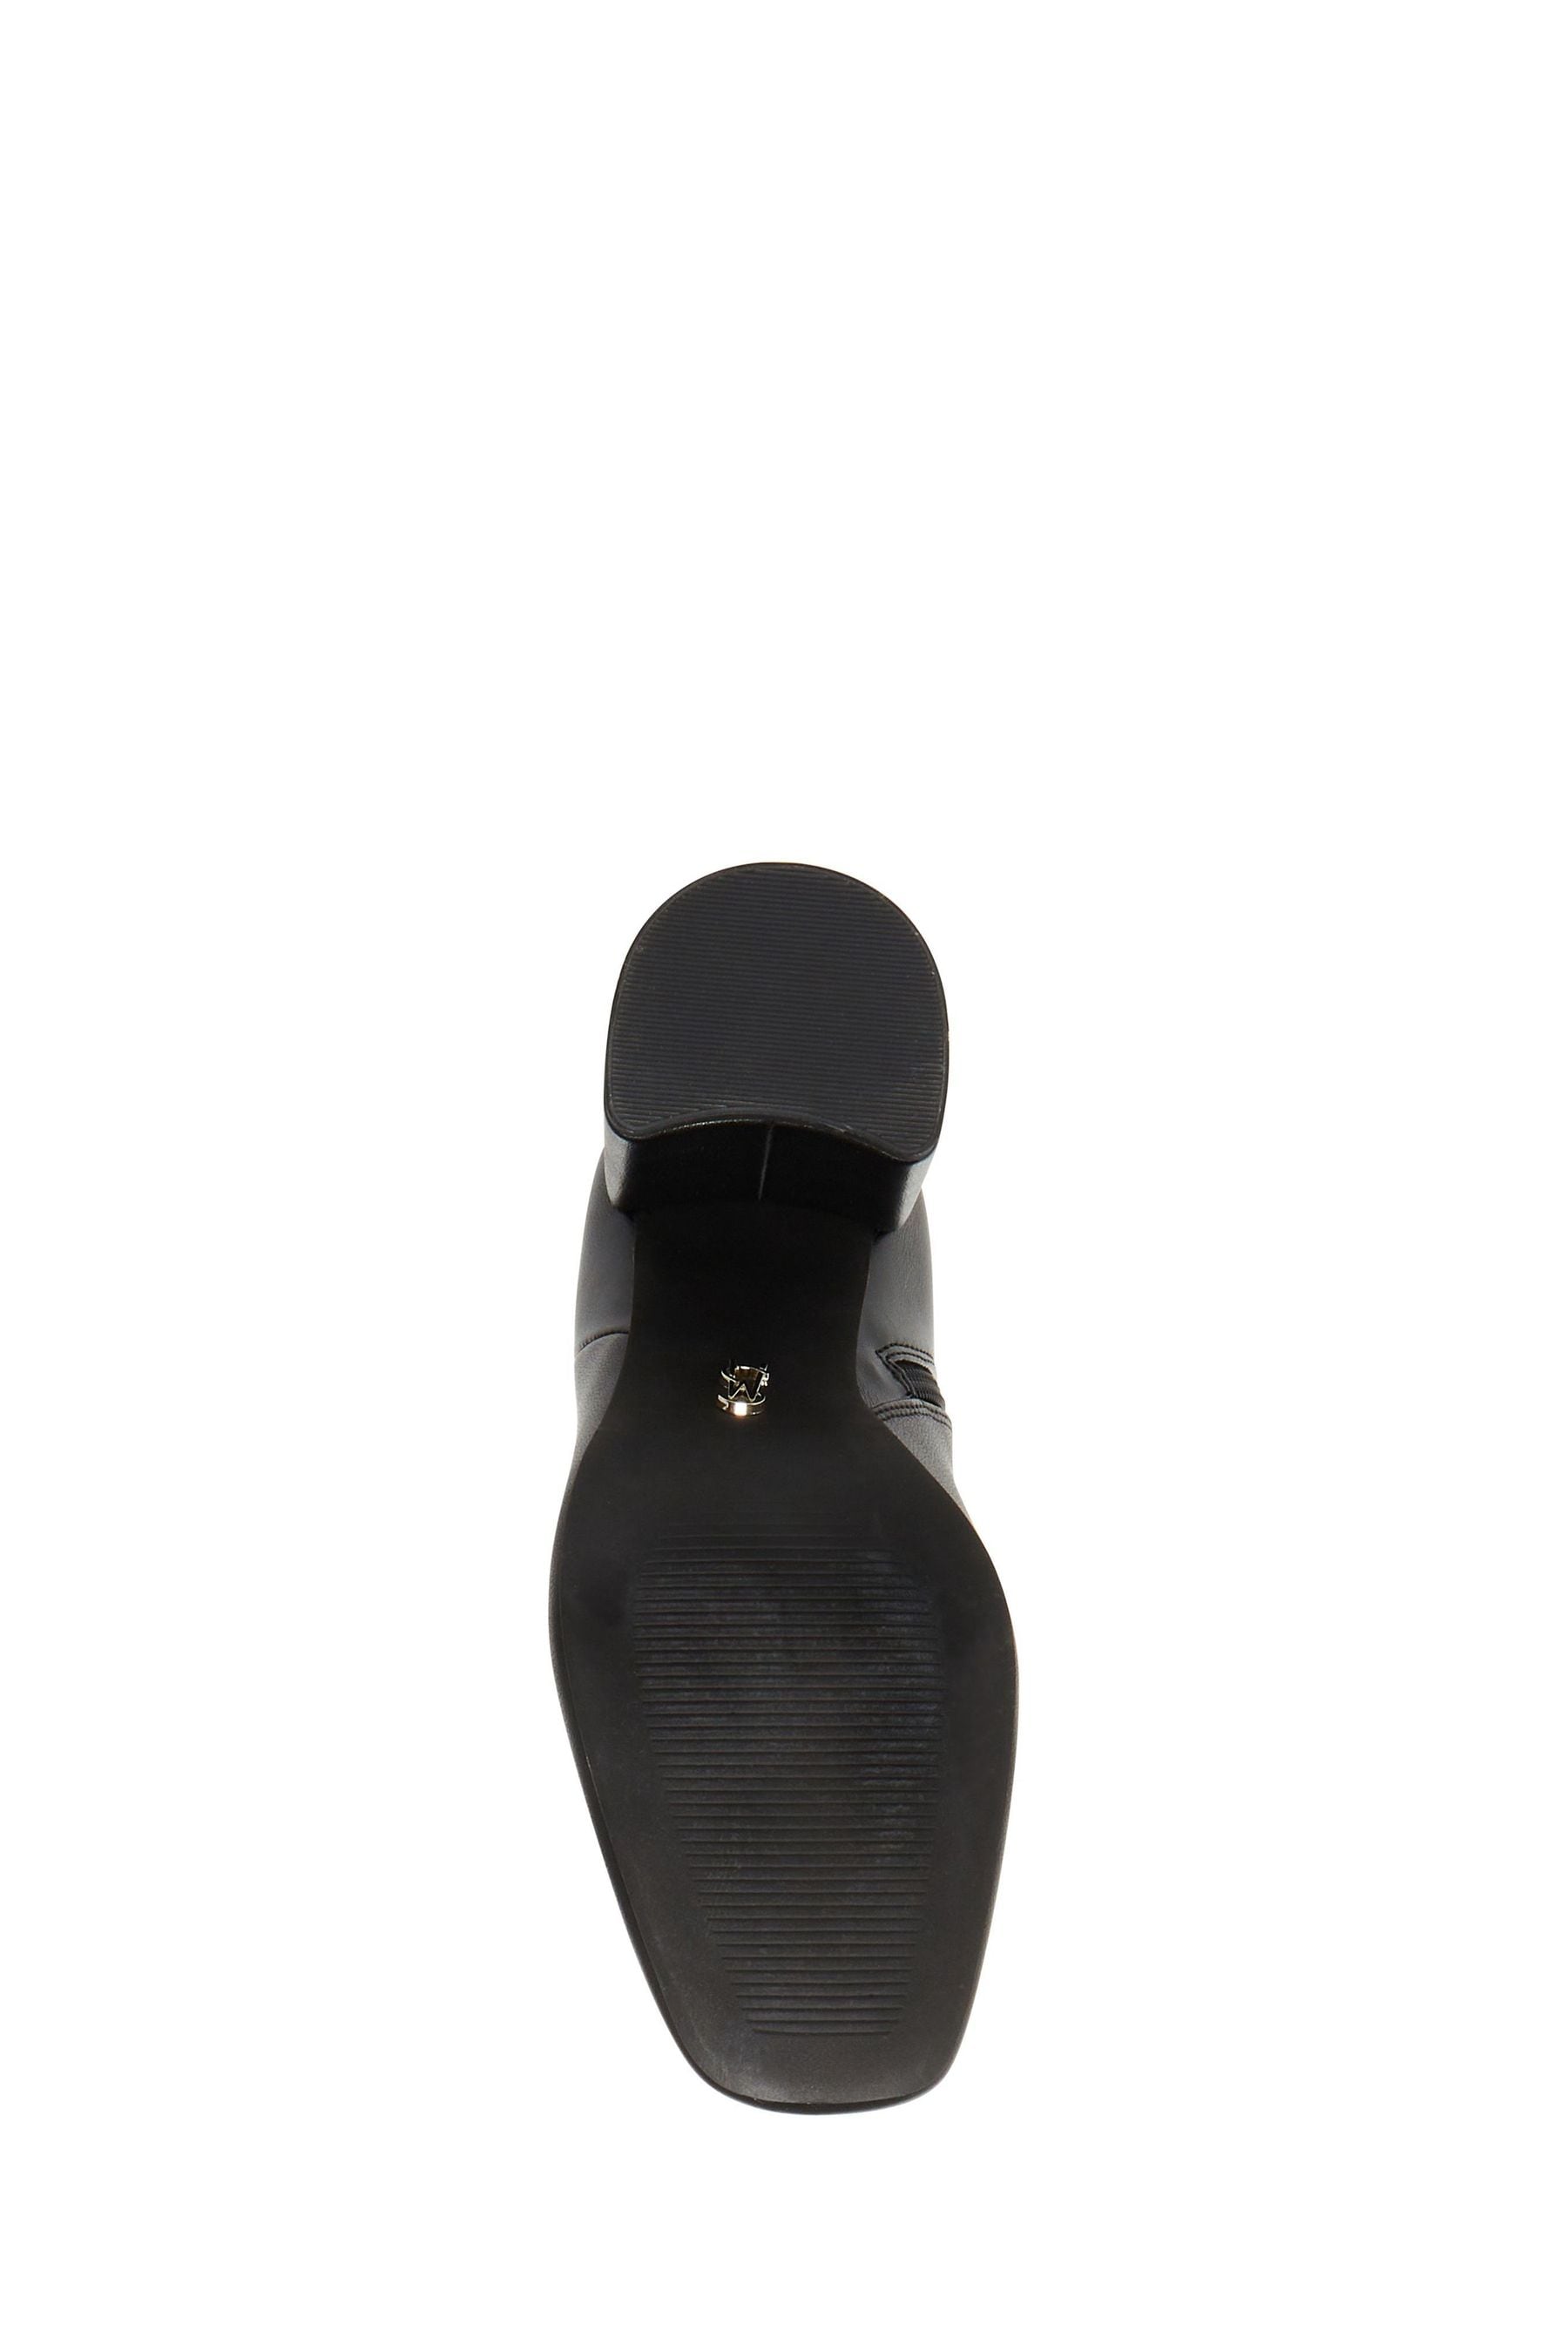 Buy Steve Madden Lizah Boot Black from the Next UK online shop